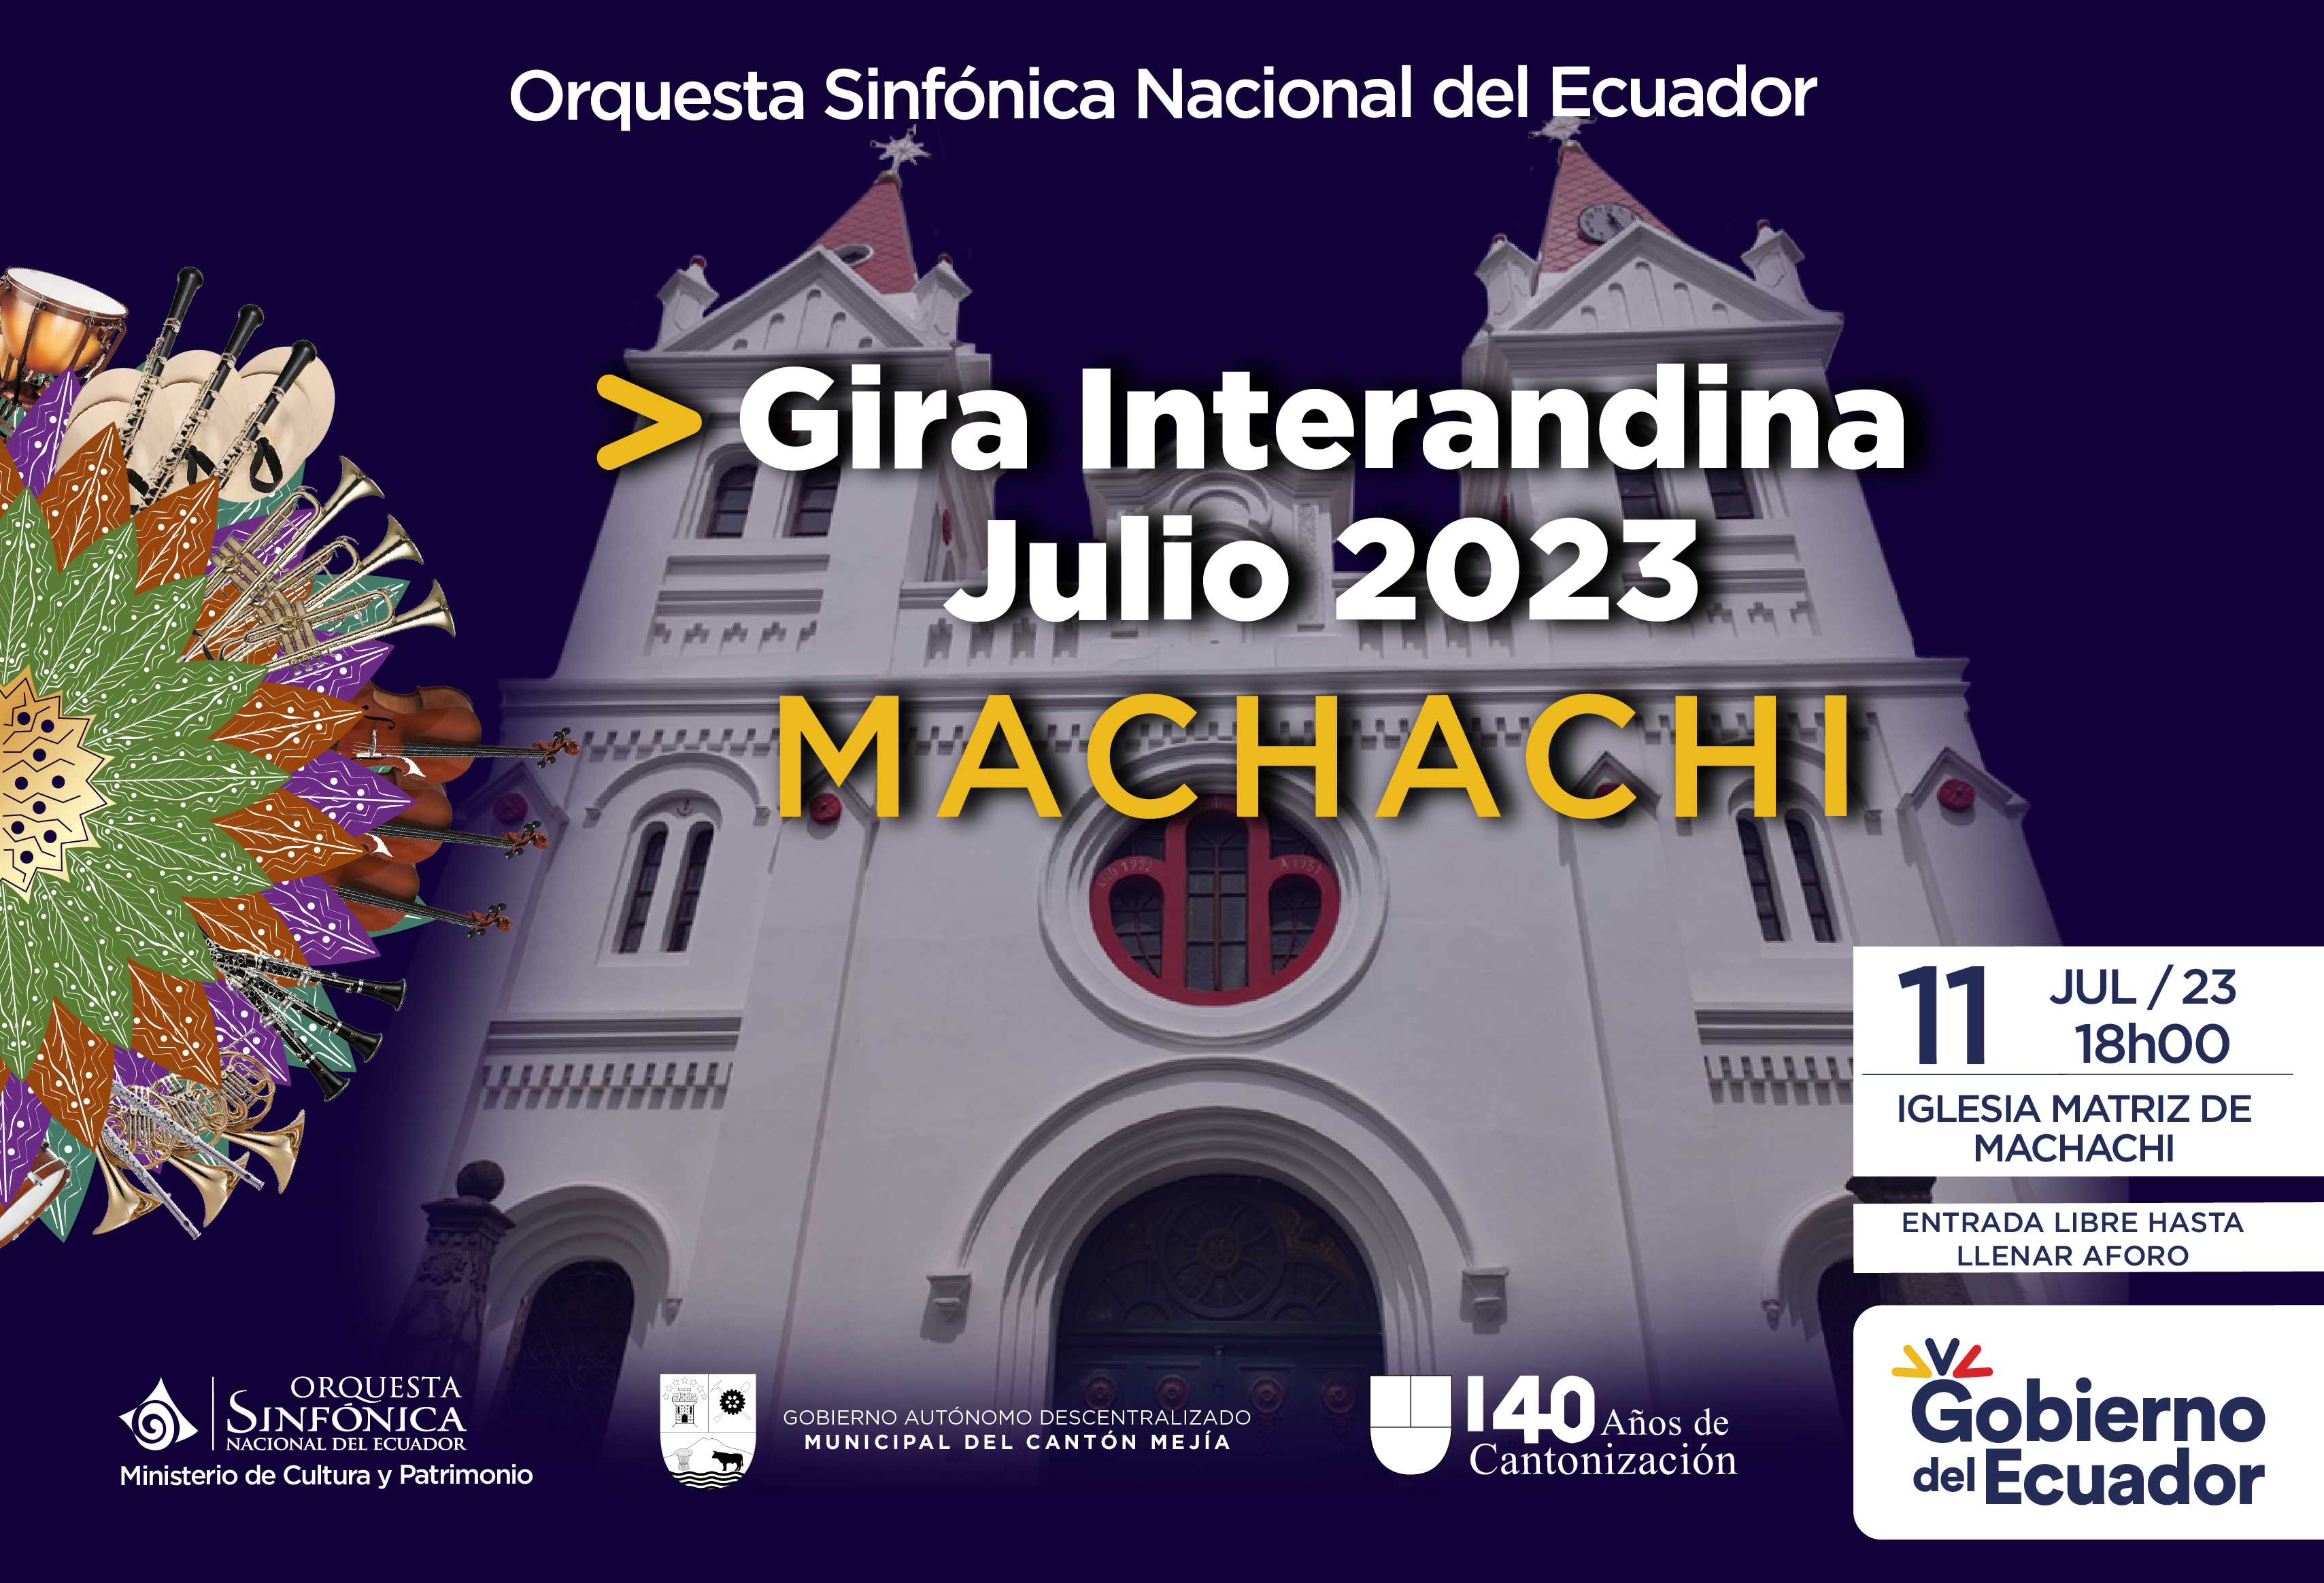 Gira Interandina Julio 2023 - Machachi